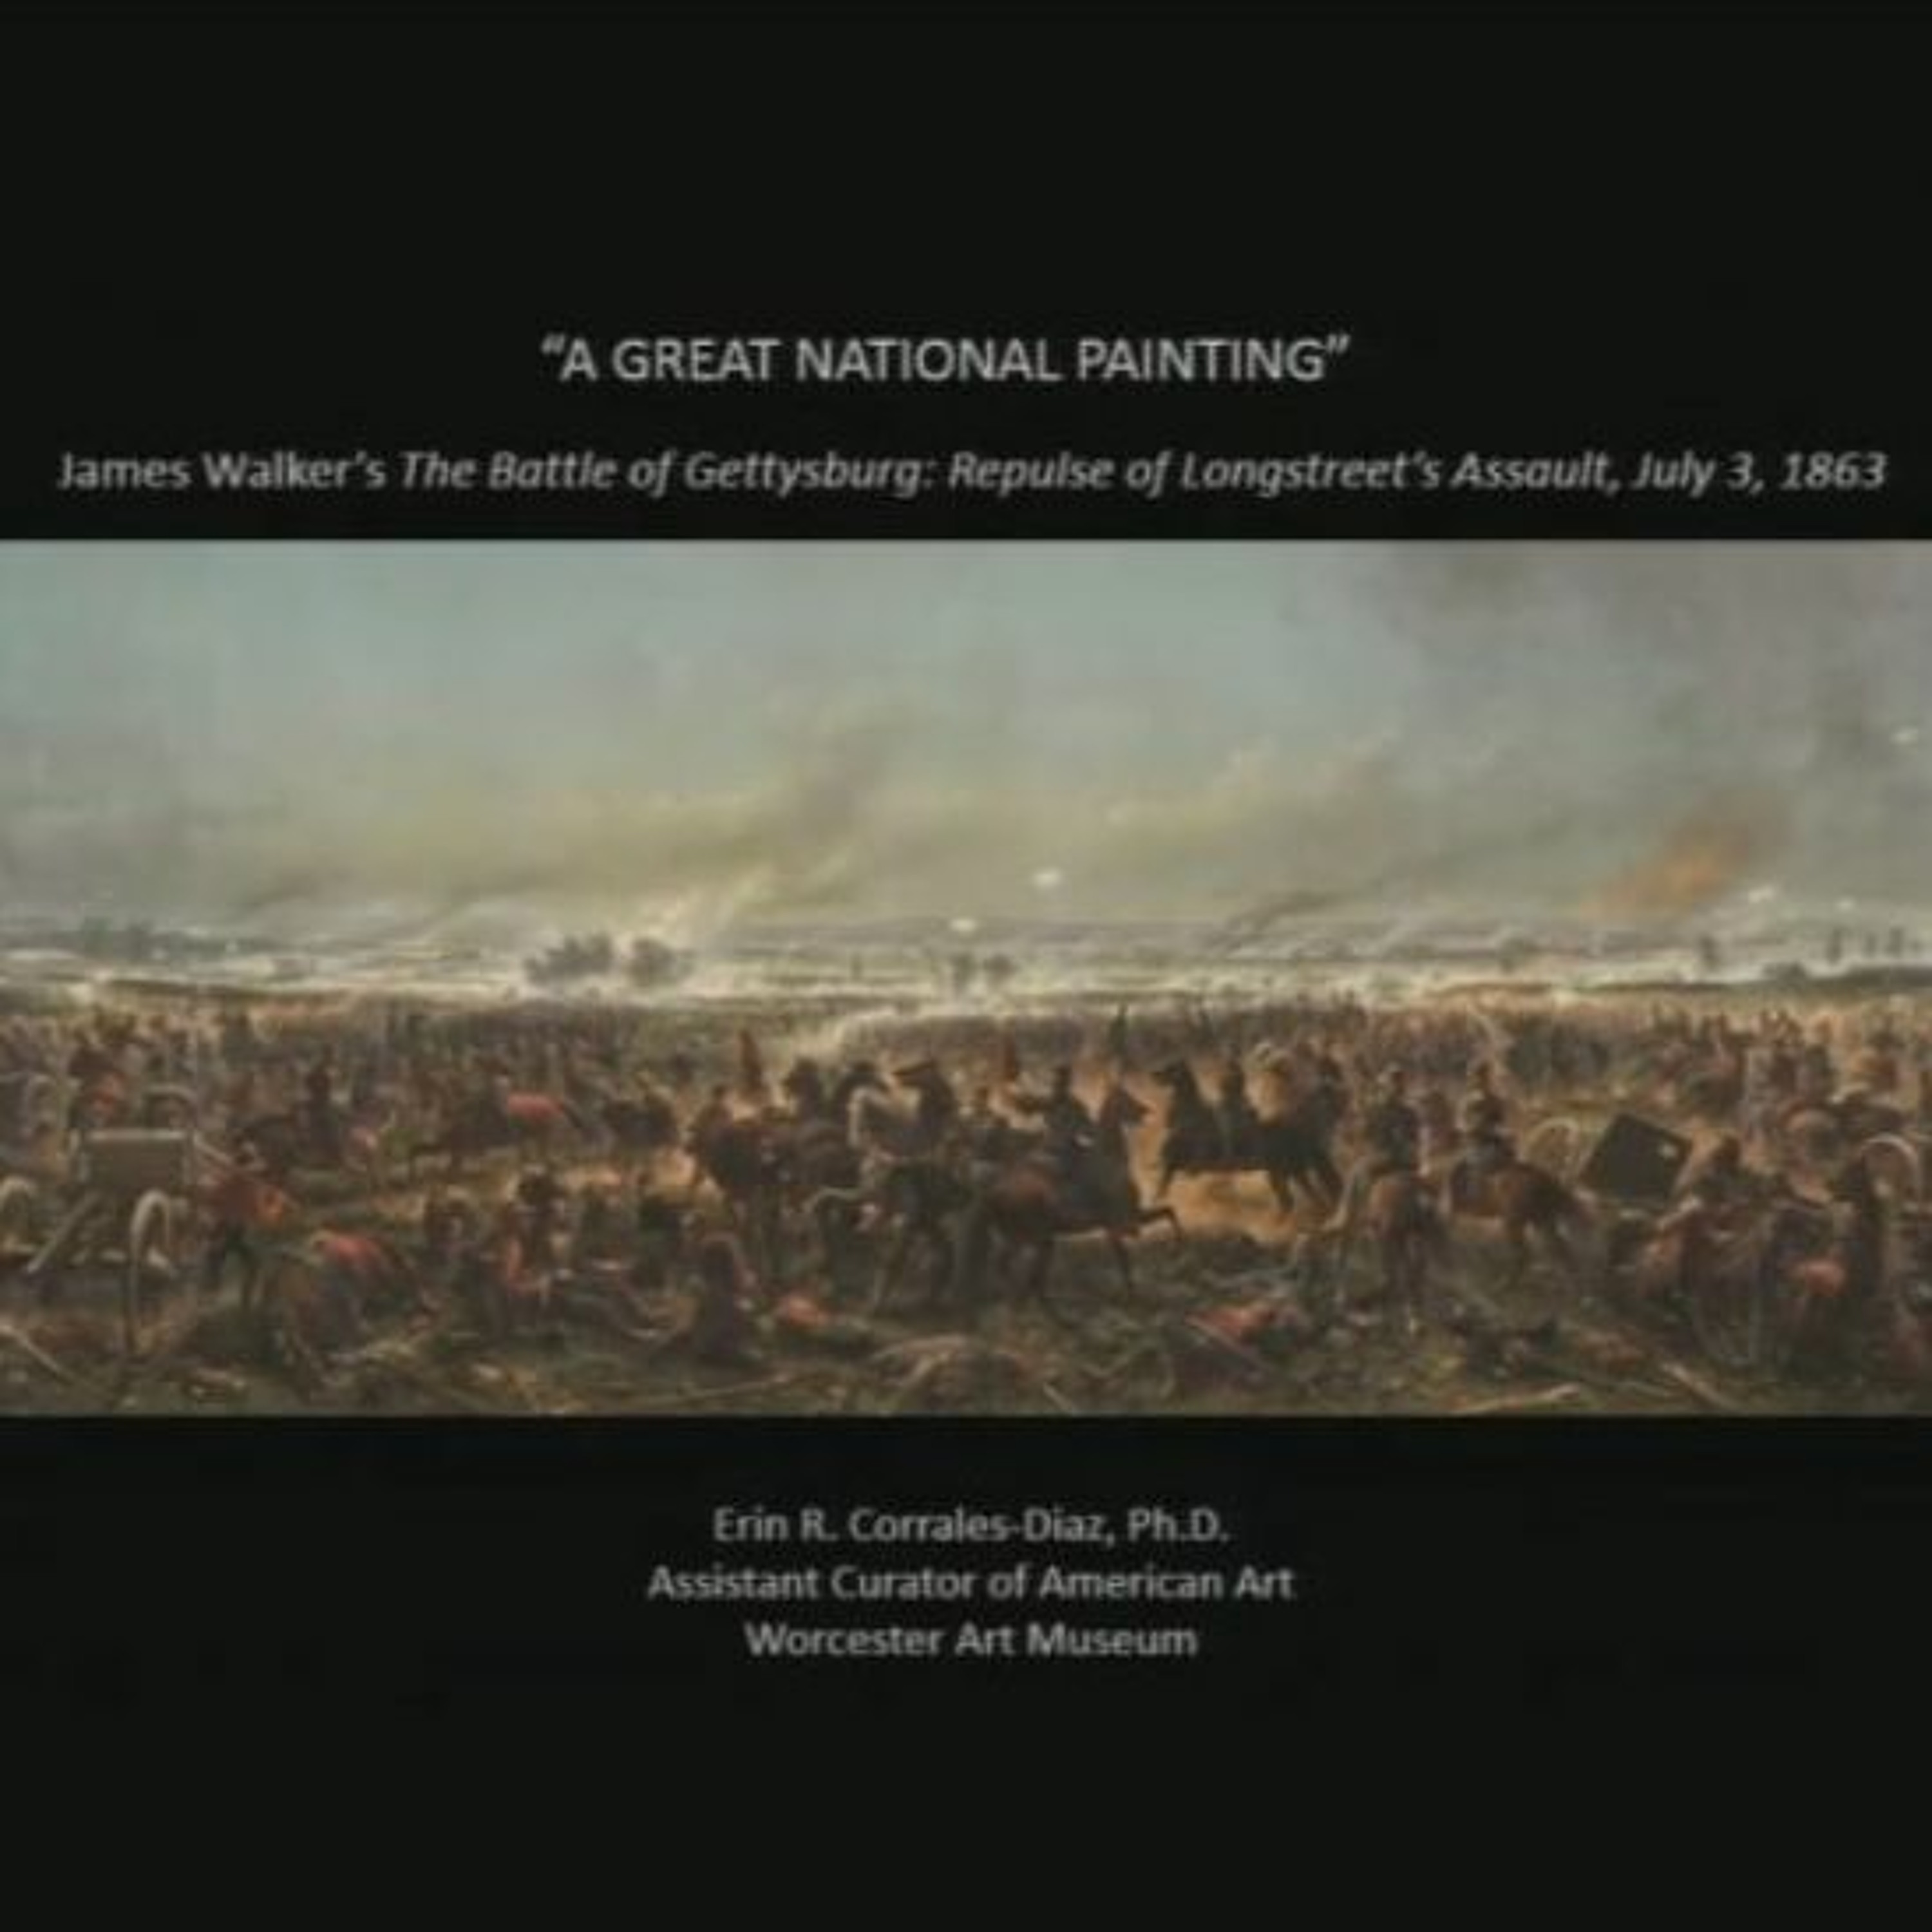 Erin Corrales-Diaz, “A Great National Painting: James Walker’s The Battle of Gettysburg”